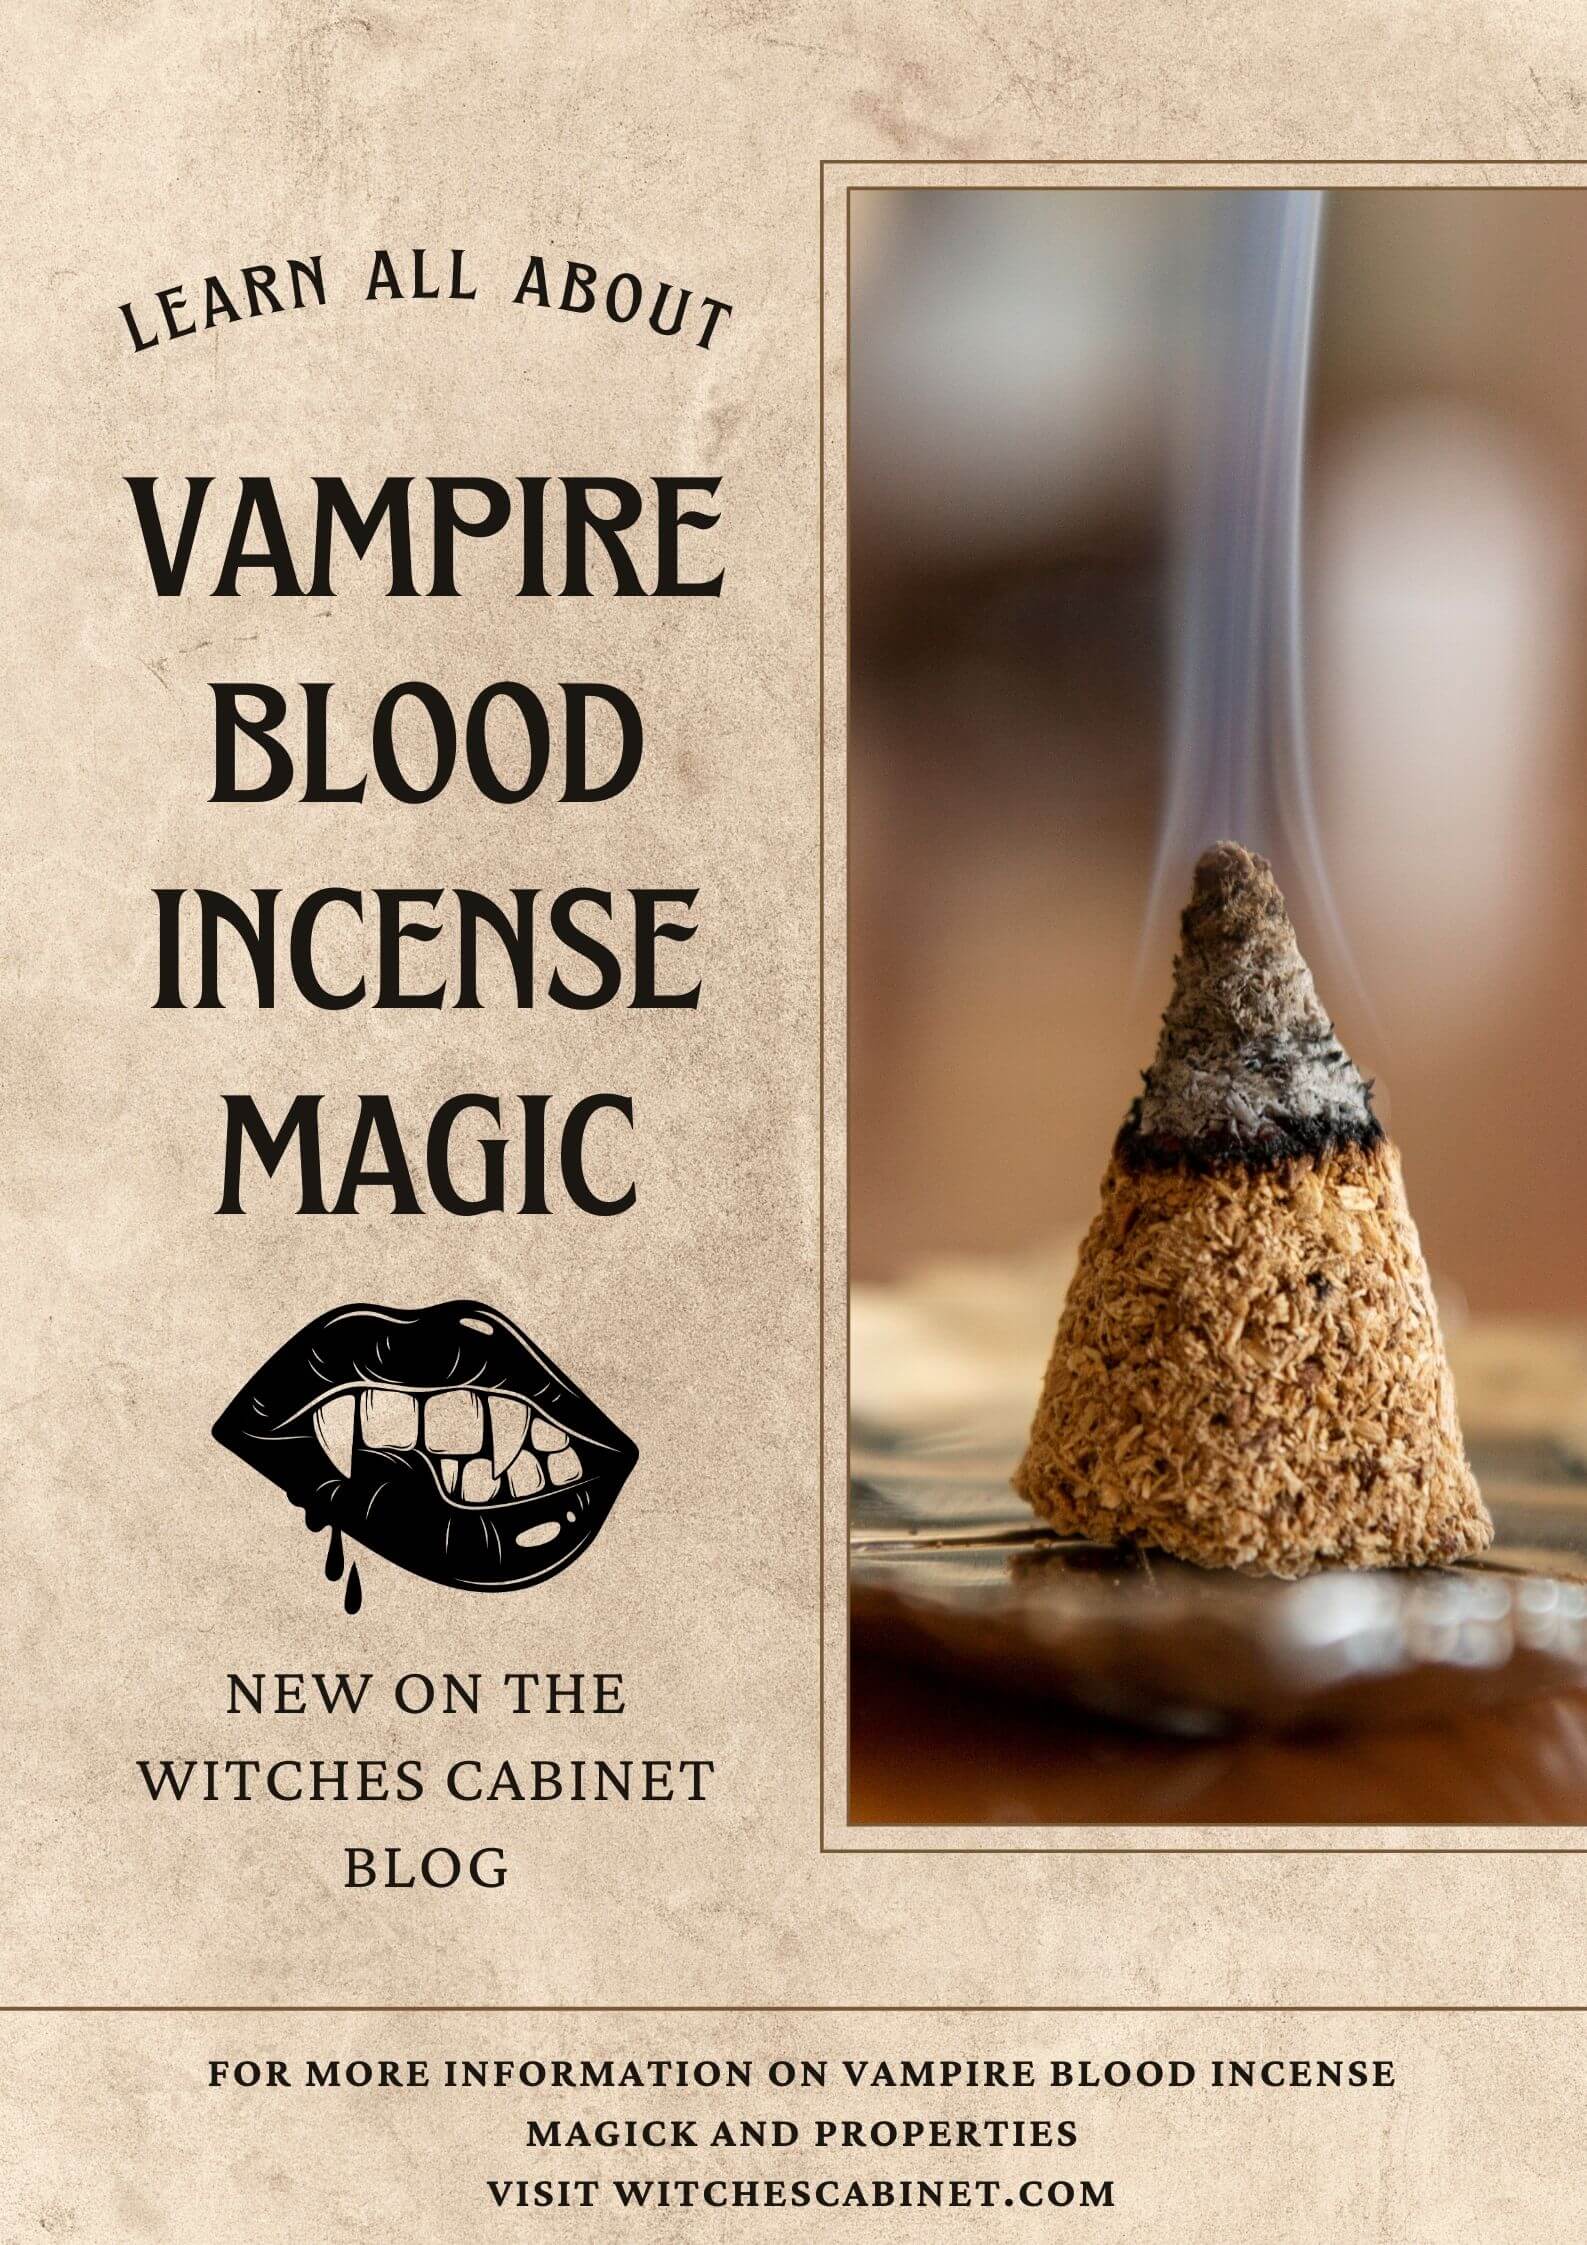 Vampire blood incense magic